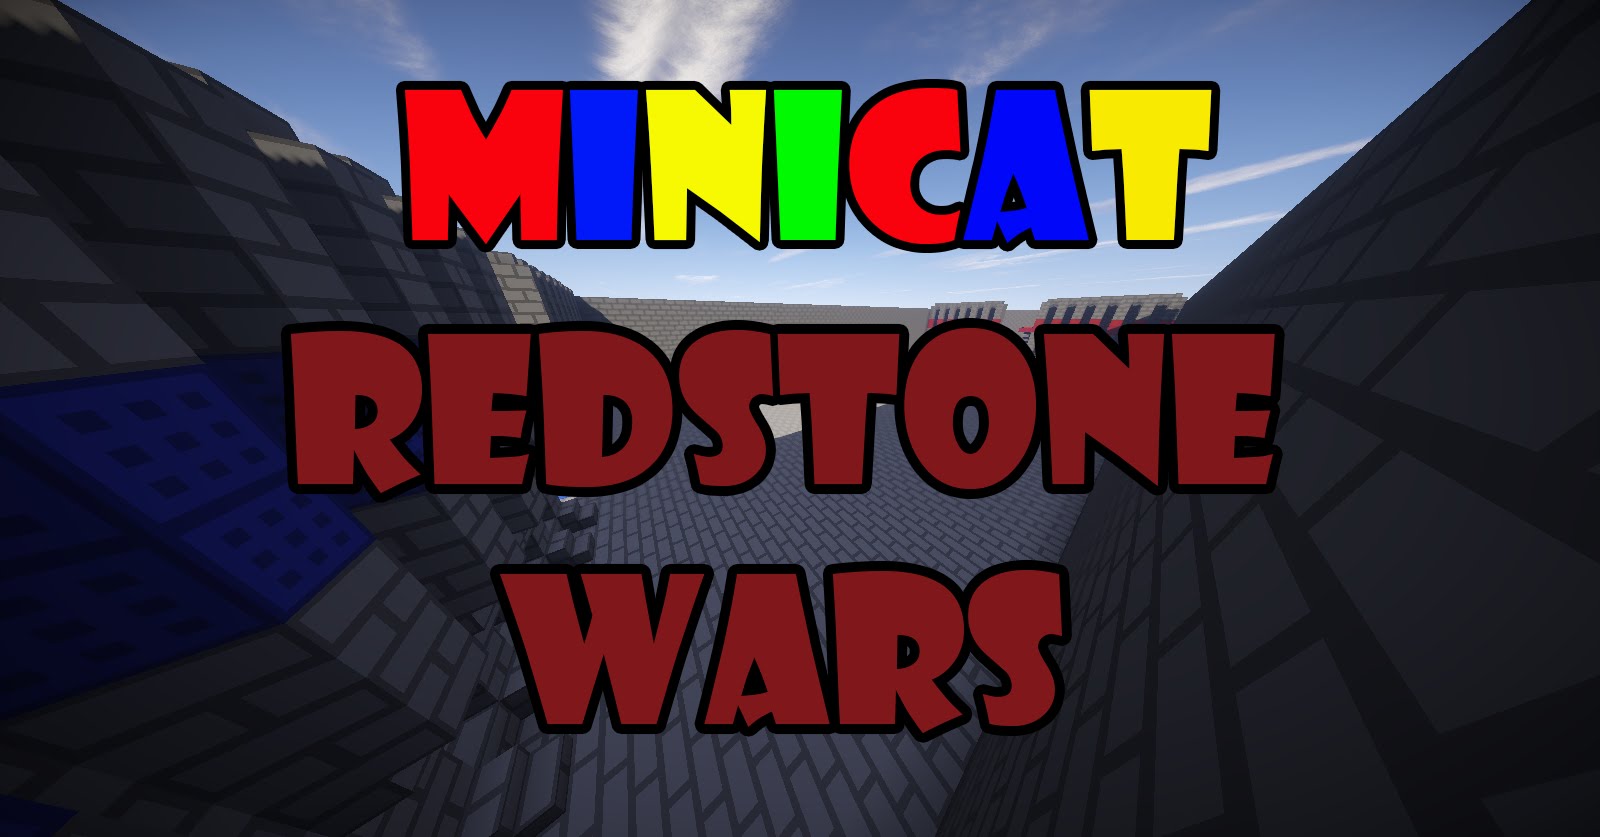 MiniCat - Partidaca a RedstoneWars! de JoniMega